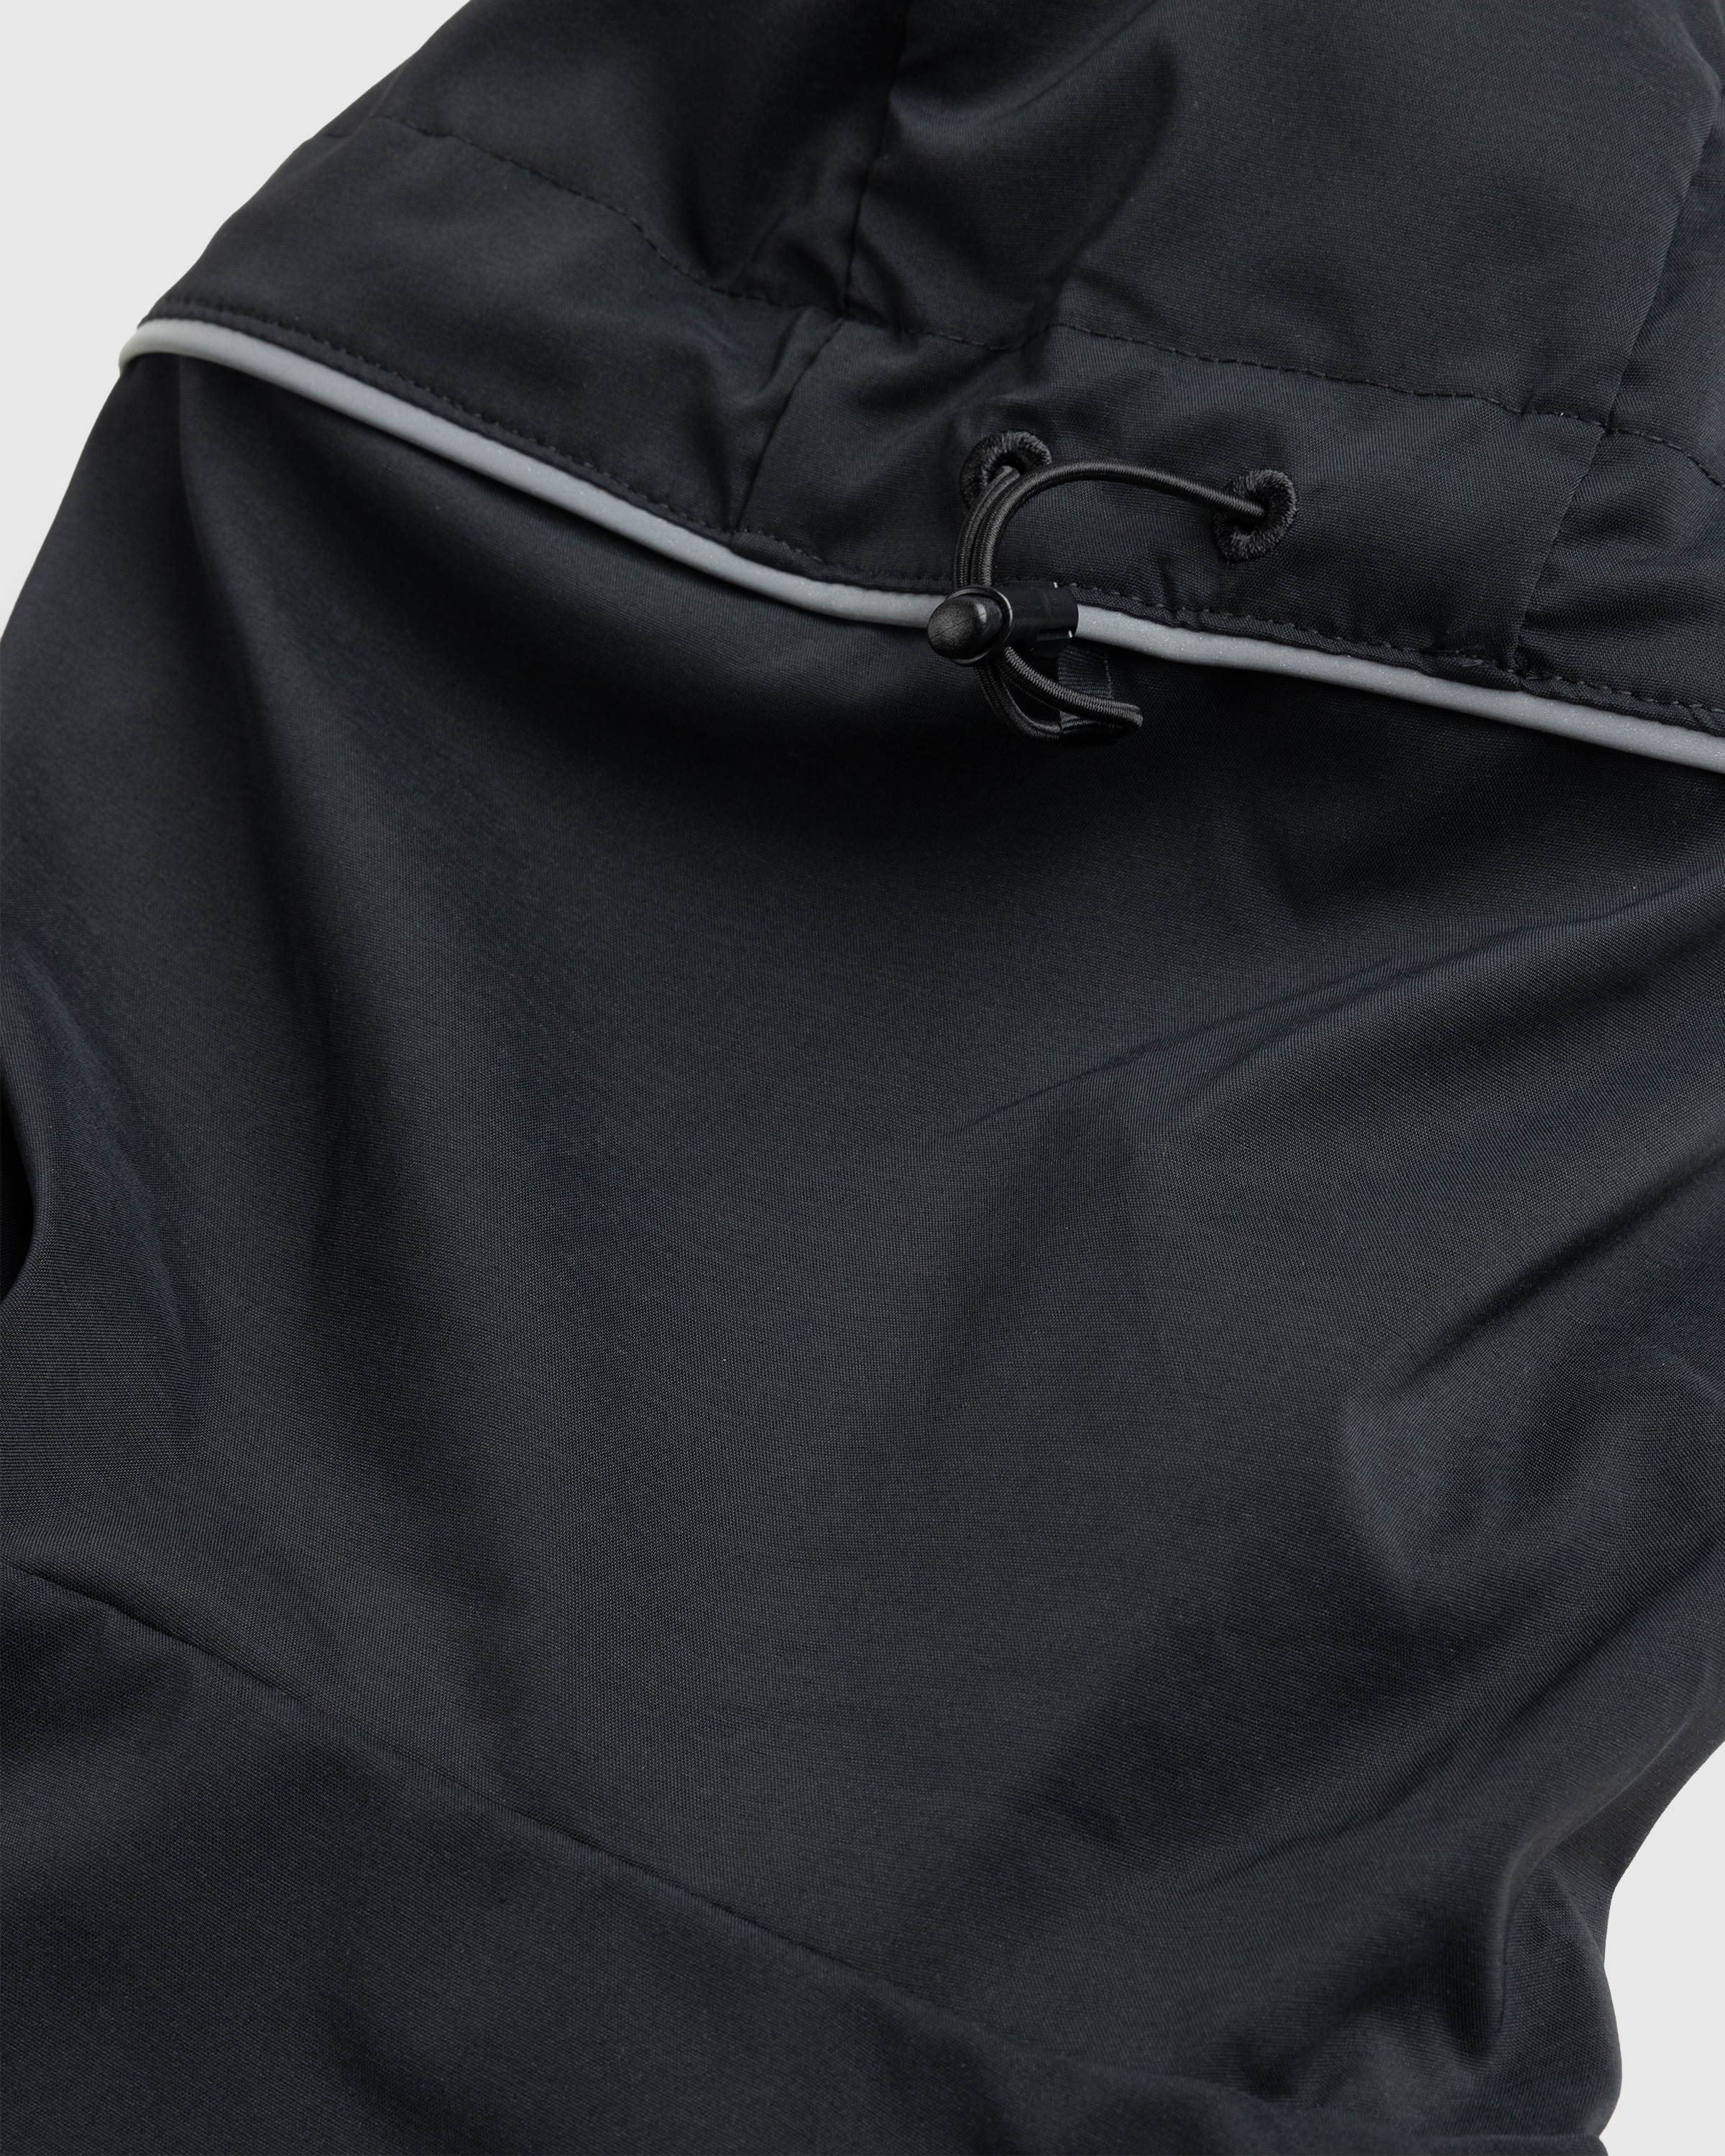 Nike x Patta – Men's Full-Zip Jacket Black - Jackets - Black - Image 8